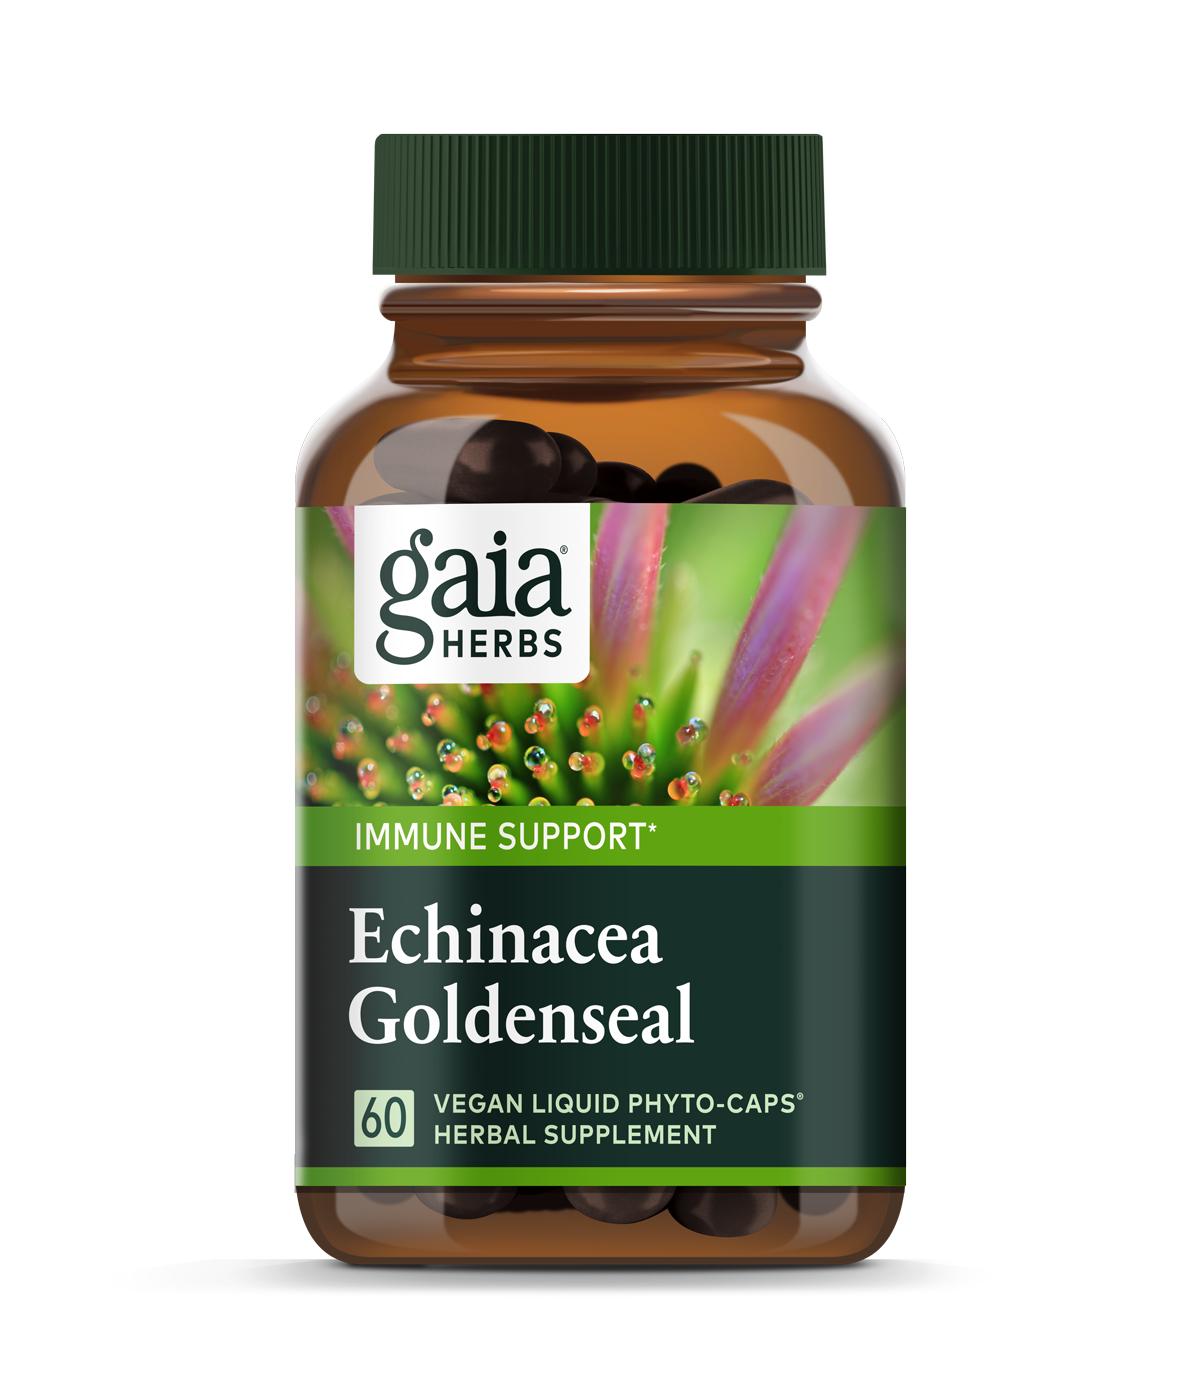 Gaia Herbs Echinacea Goldenseal Vegetarian Liquid Phyto-Caps; image 1 of 2